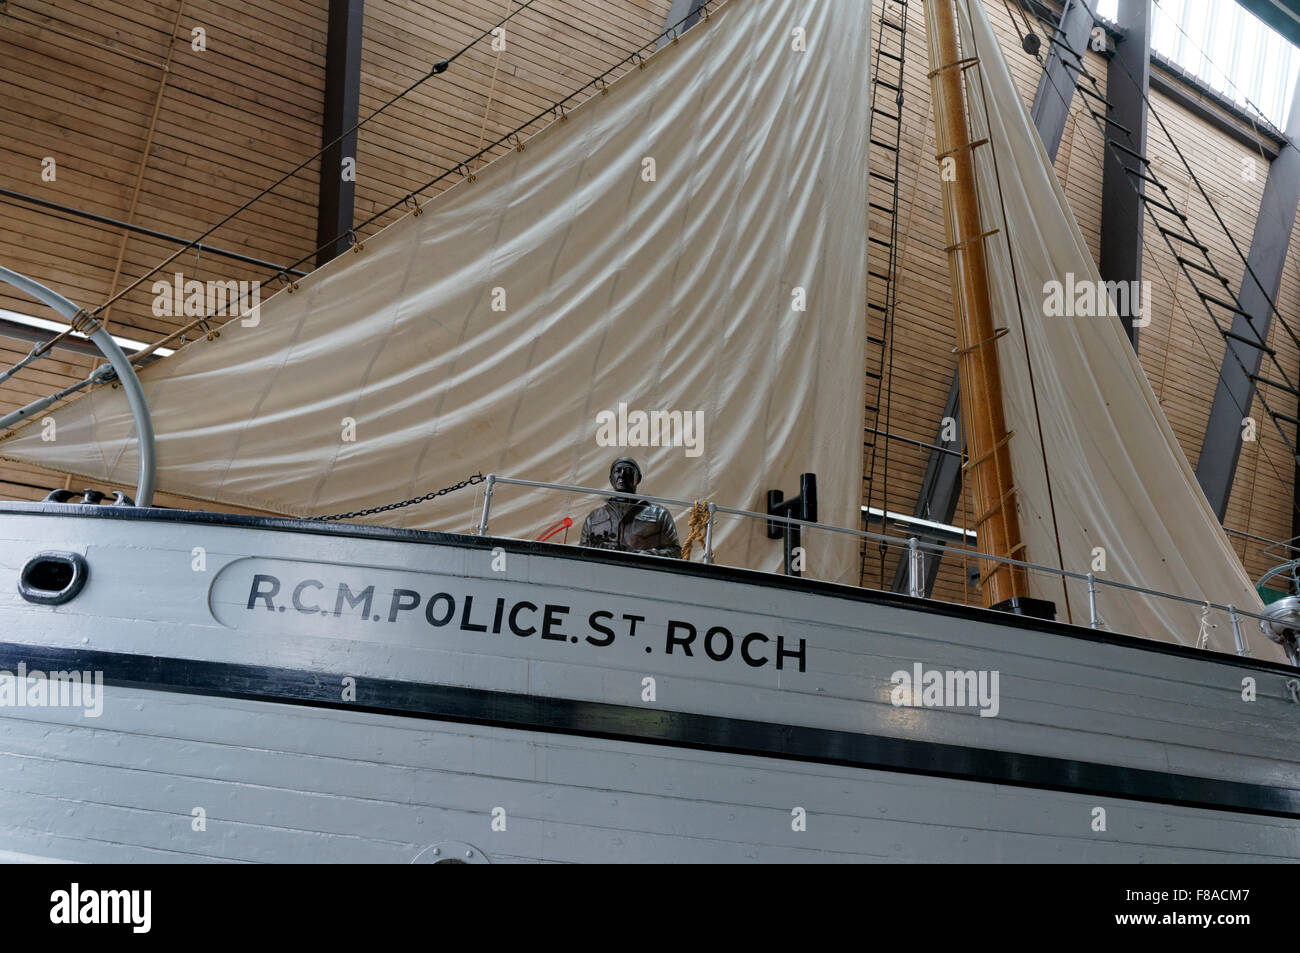 Captain Henry Larsen statue on deck of RCMP St. Roch schooner, Vancouver Maritime Museum, Vancouver, BC, Canada Stock Photo